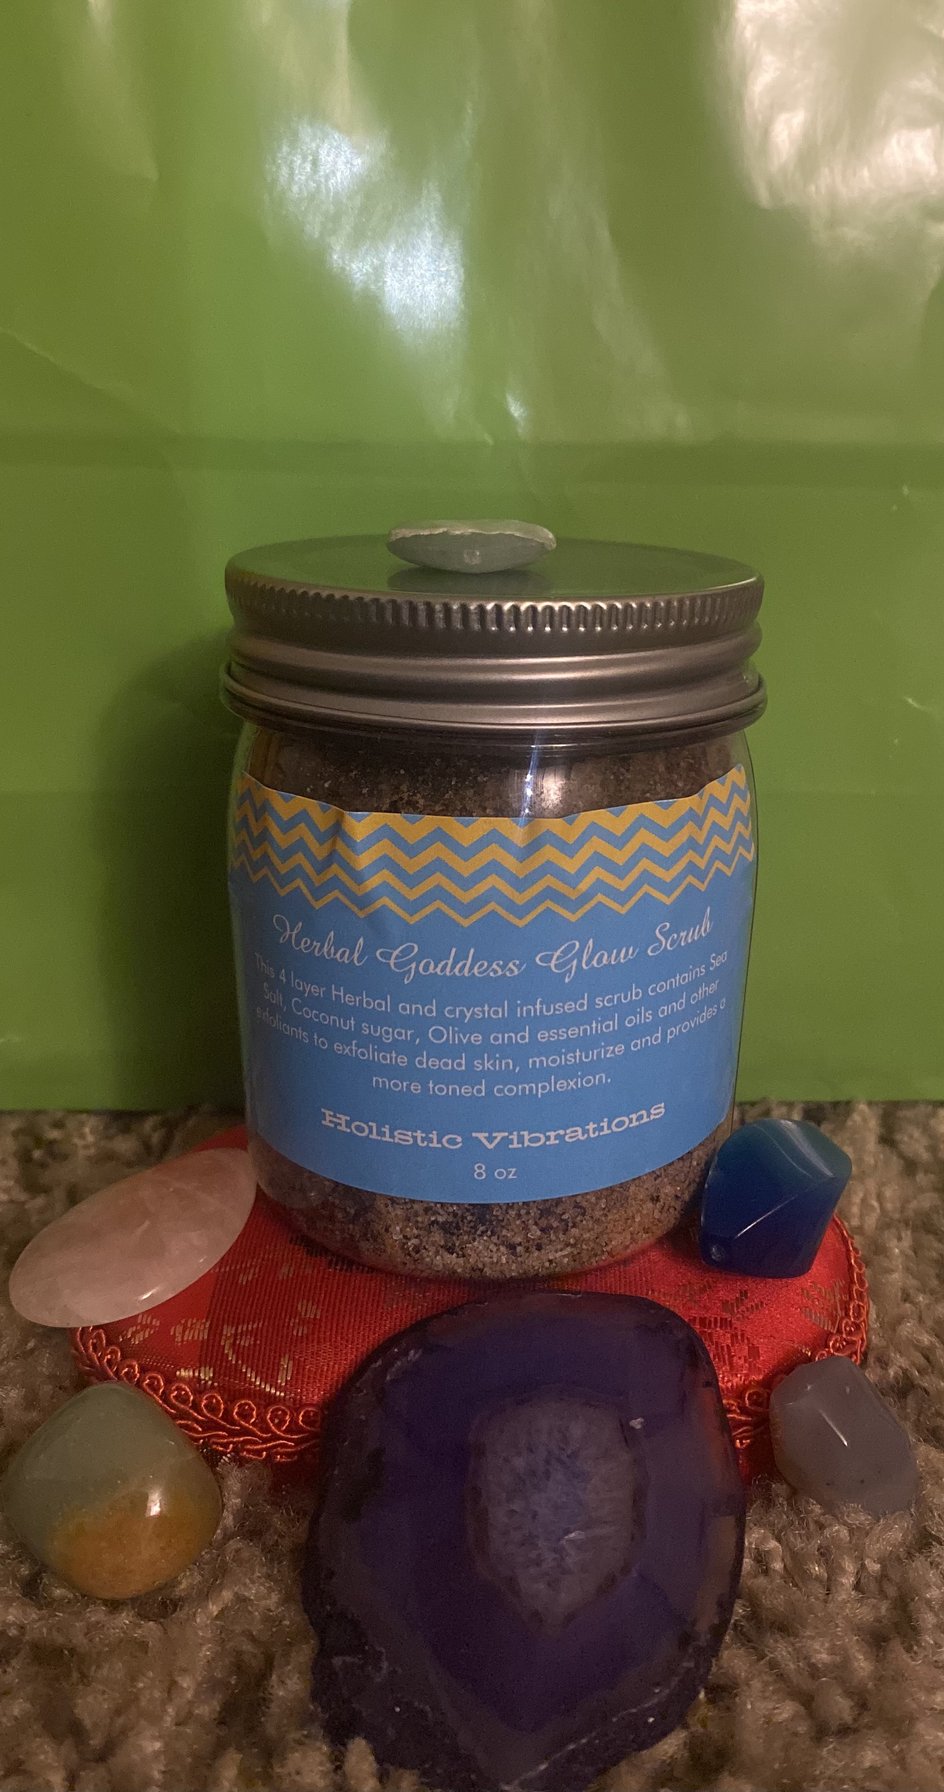 Holistic Vibration Herbal Goddess Glow Scrub